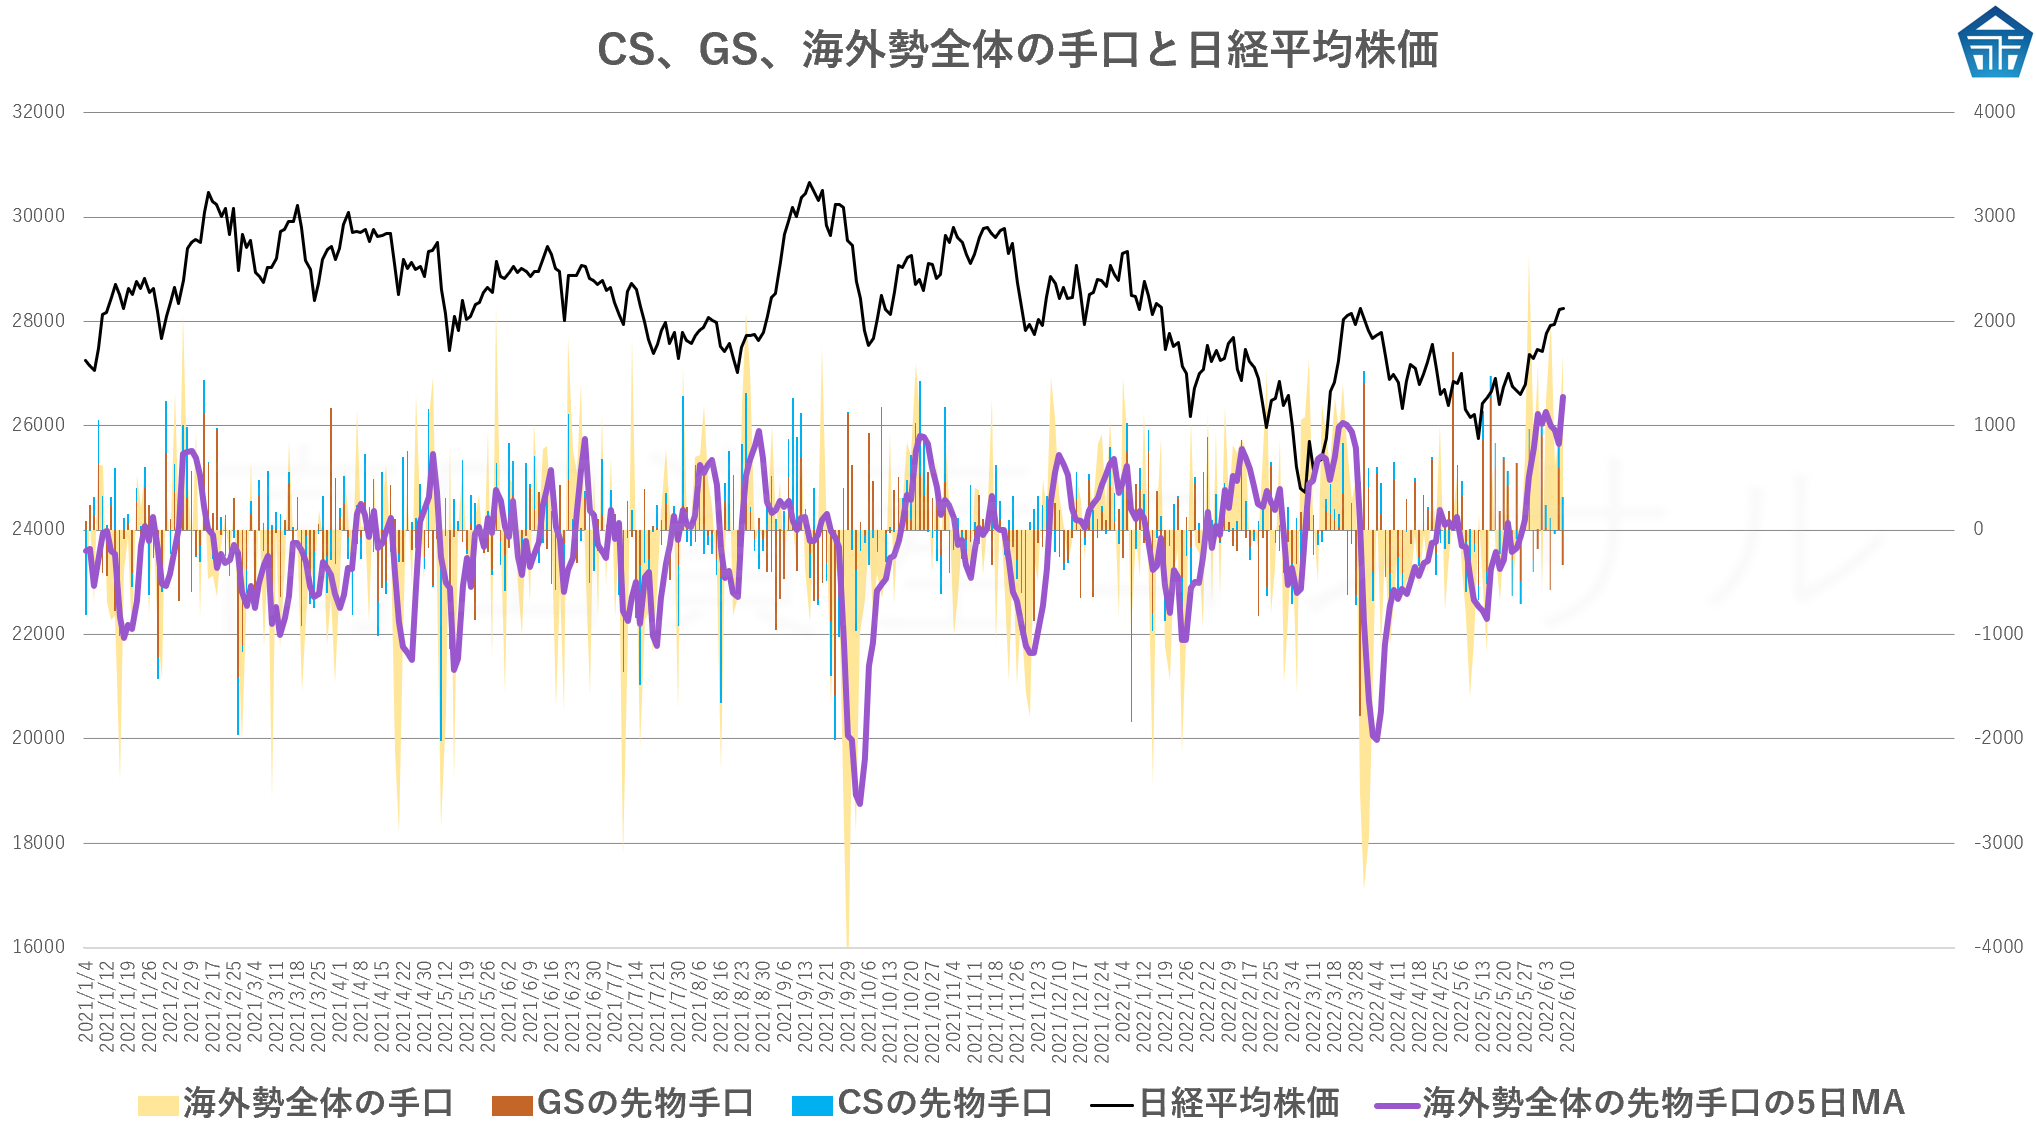 CS、GS、海外勢全体の手口と日経平均株価20220609